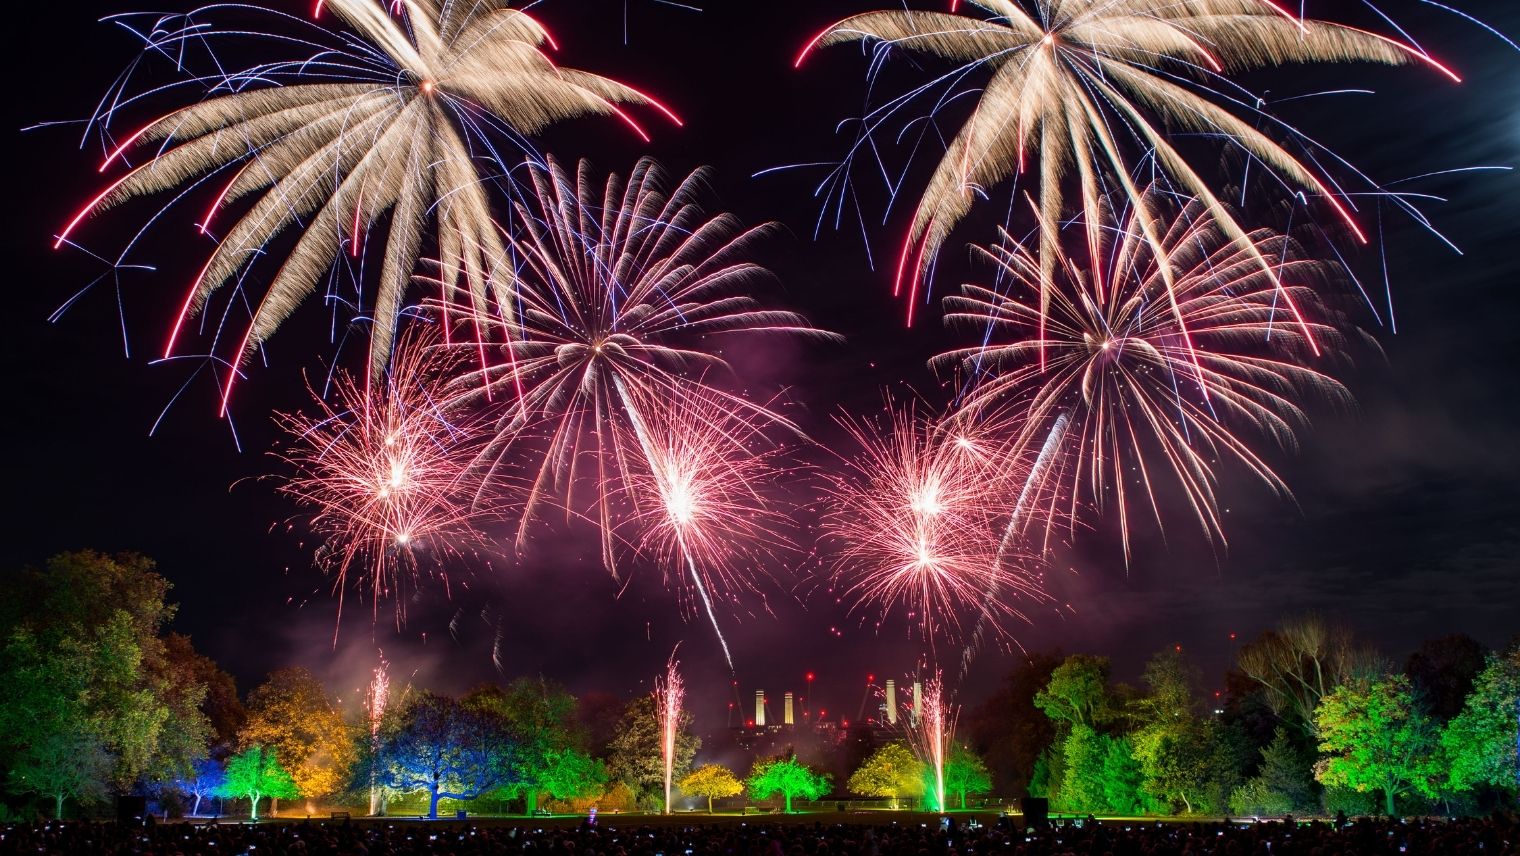 Fireworks display at Battersea Park